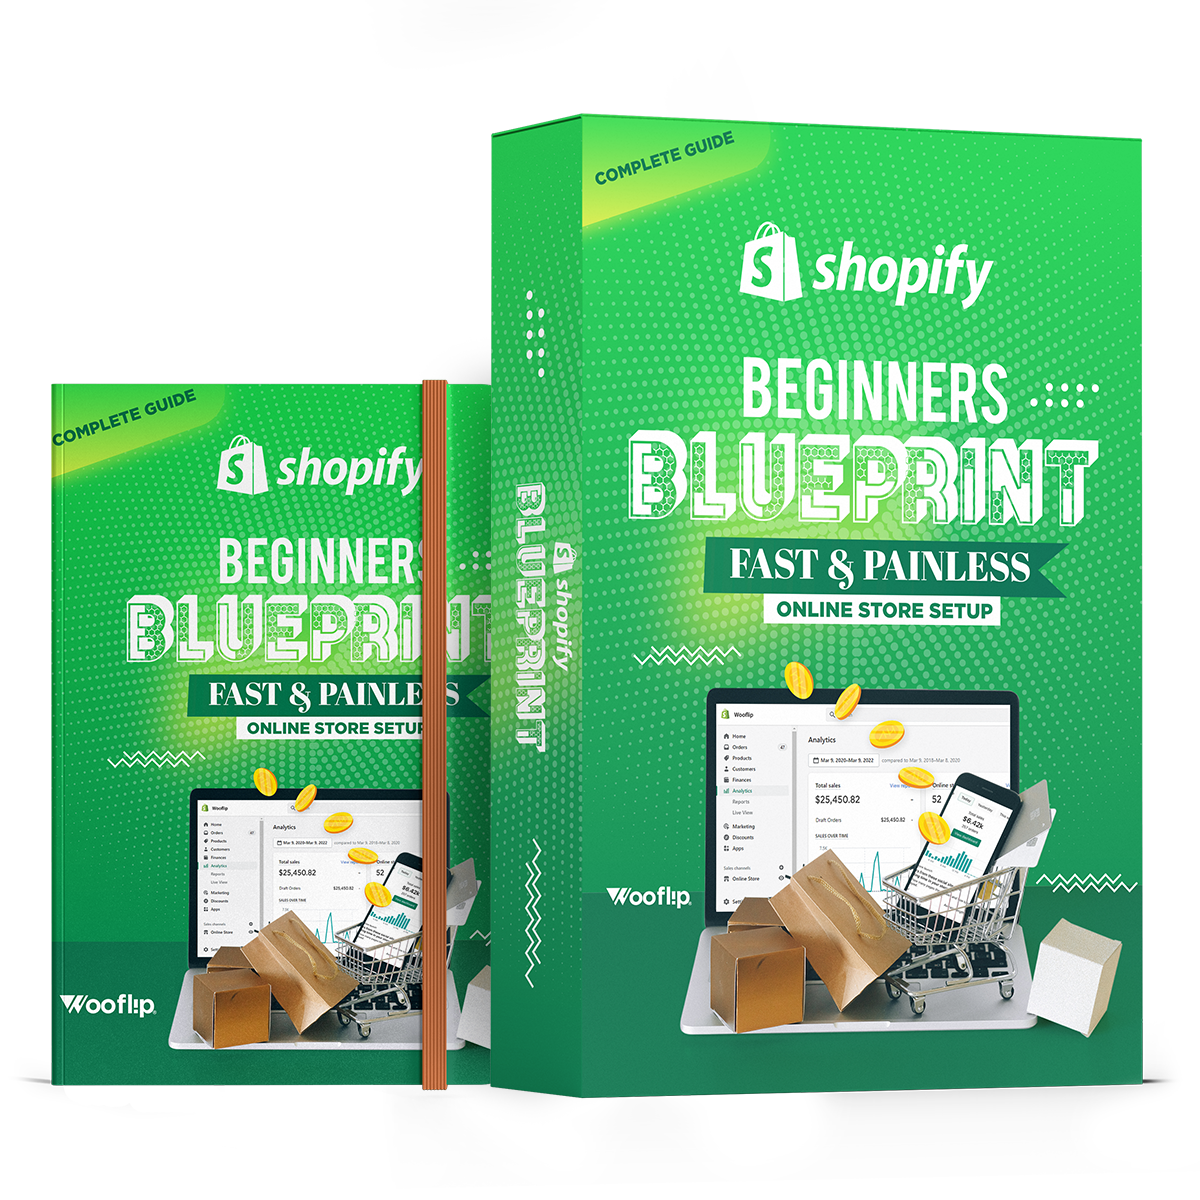 Shopify Beginners Blueprint PLUS+